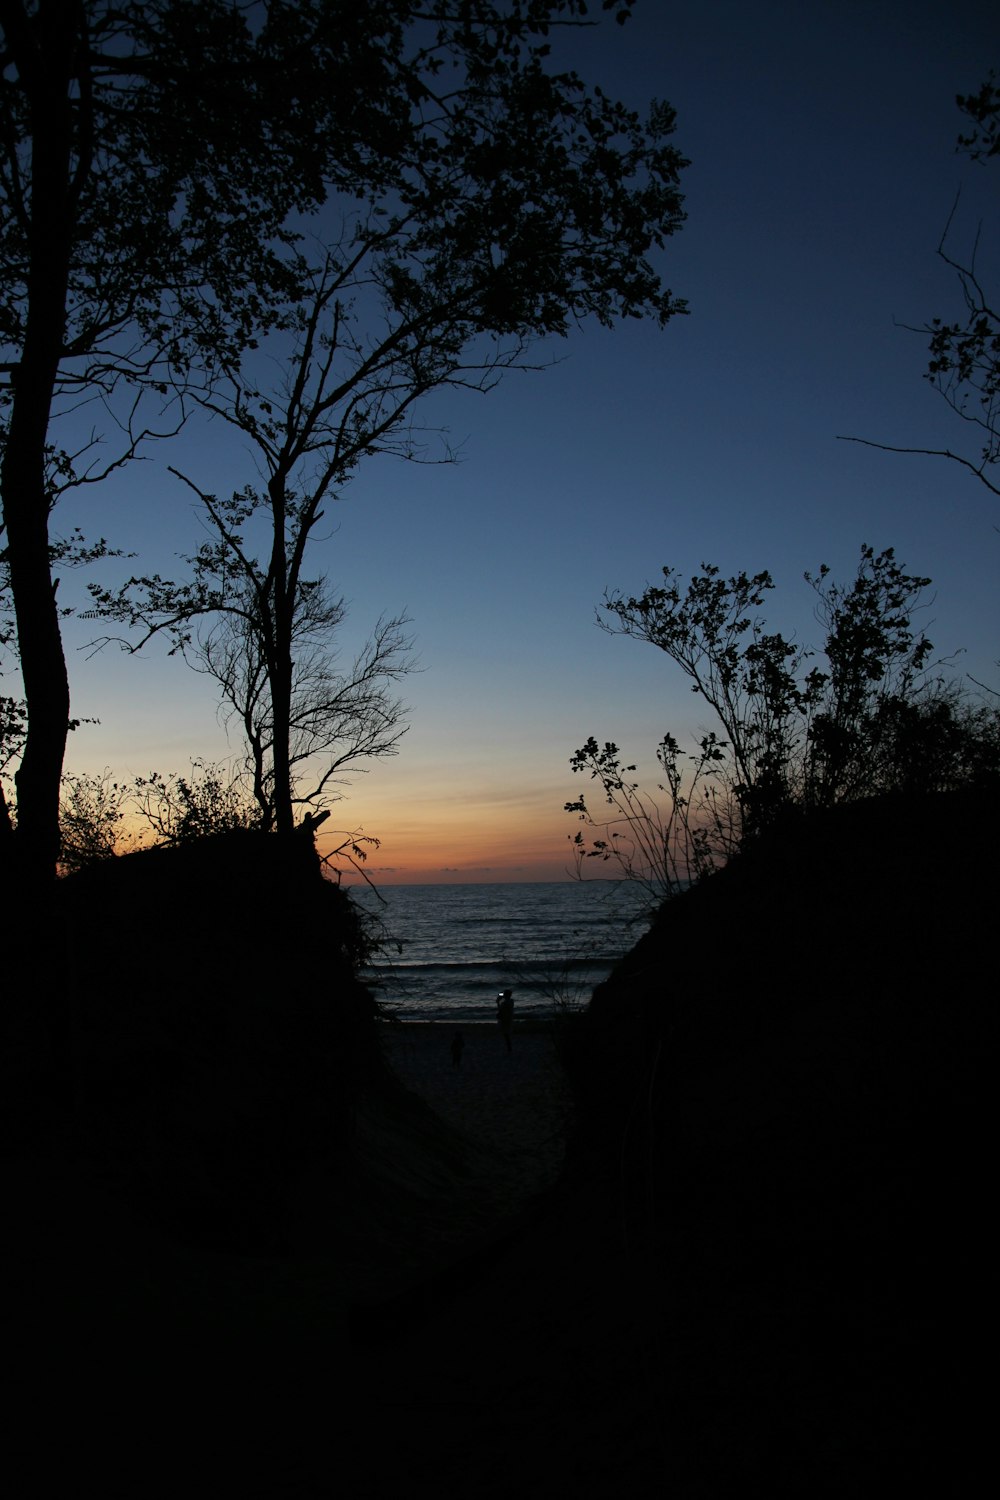 a sunset over a beach